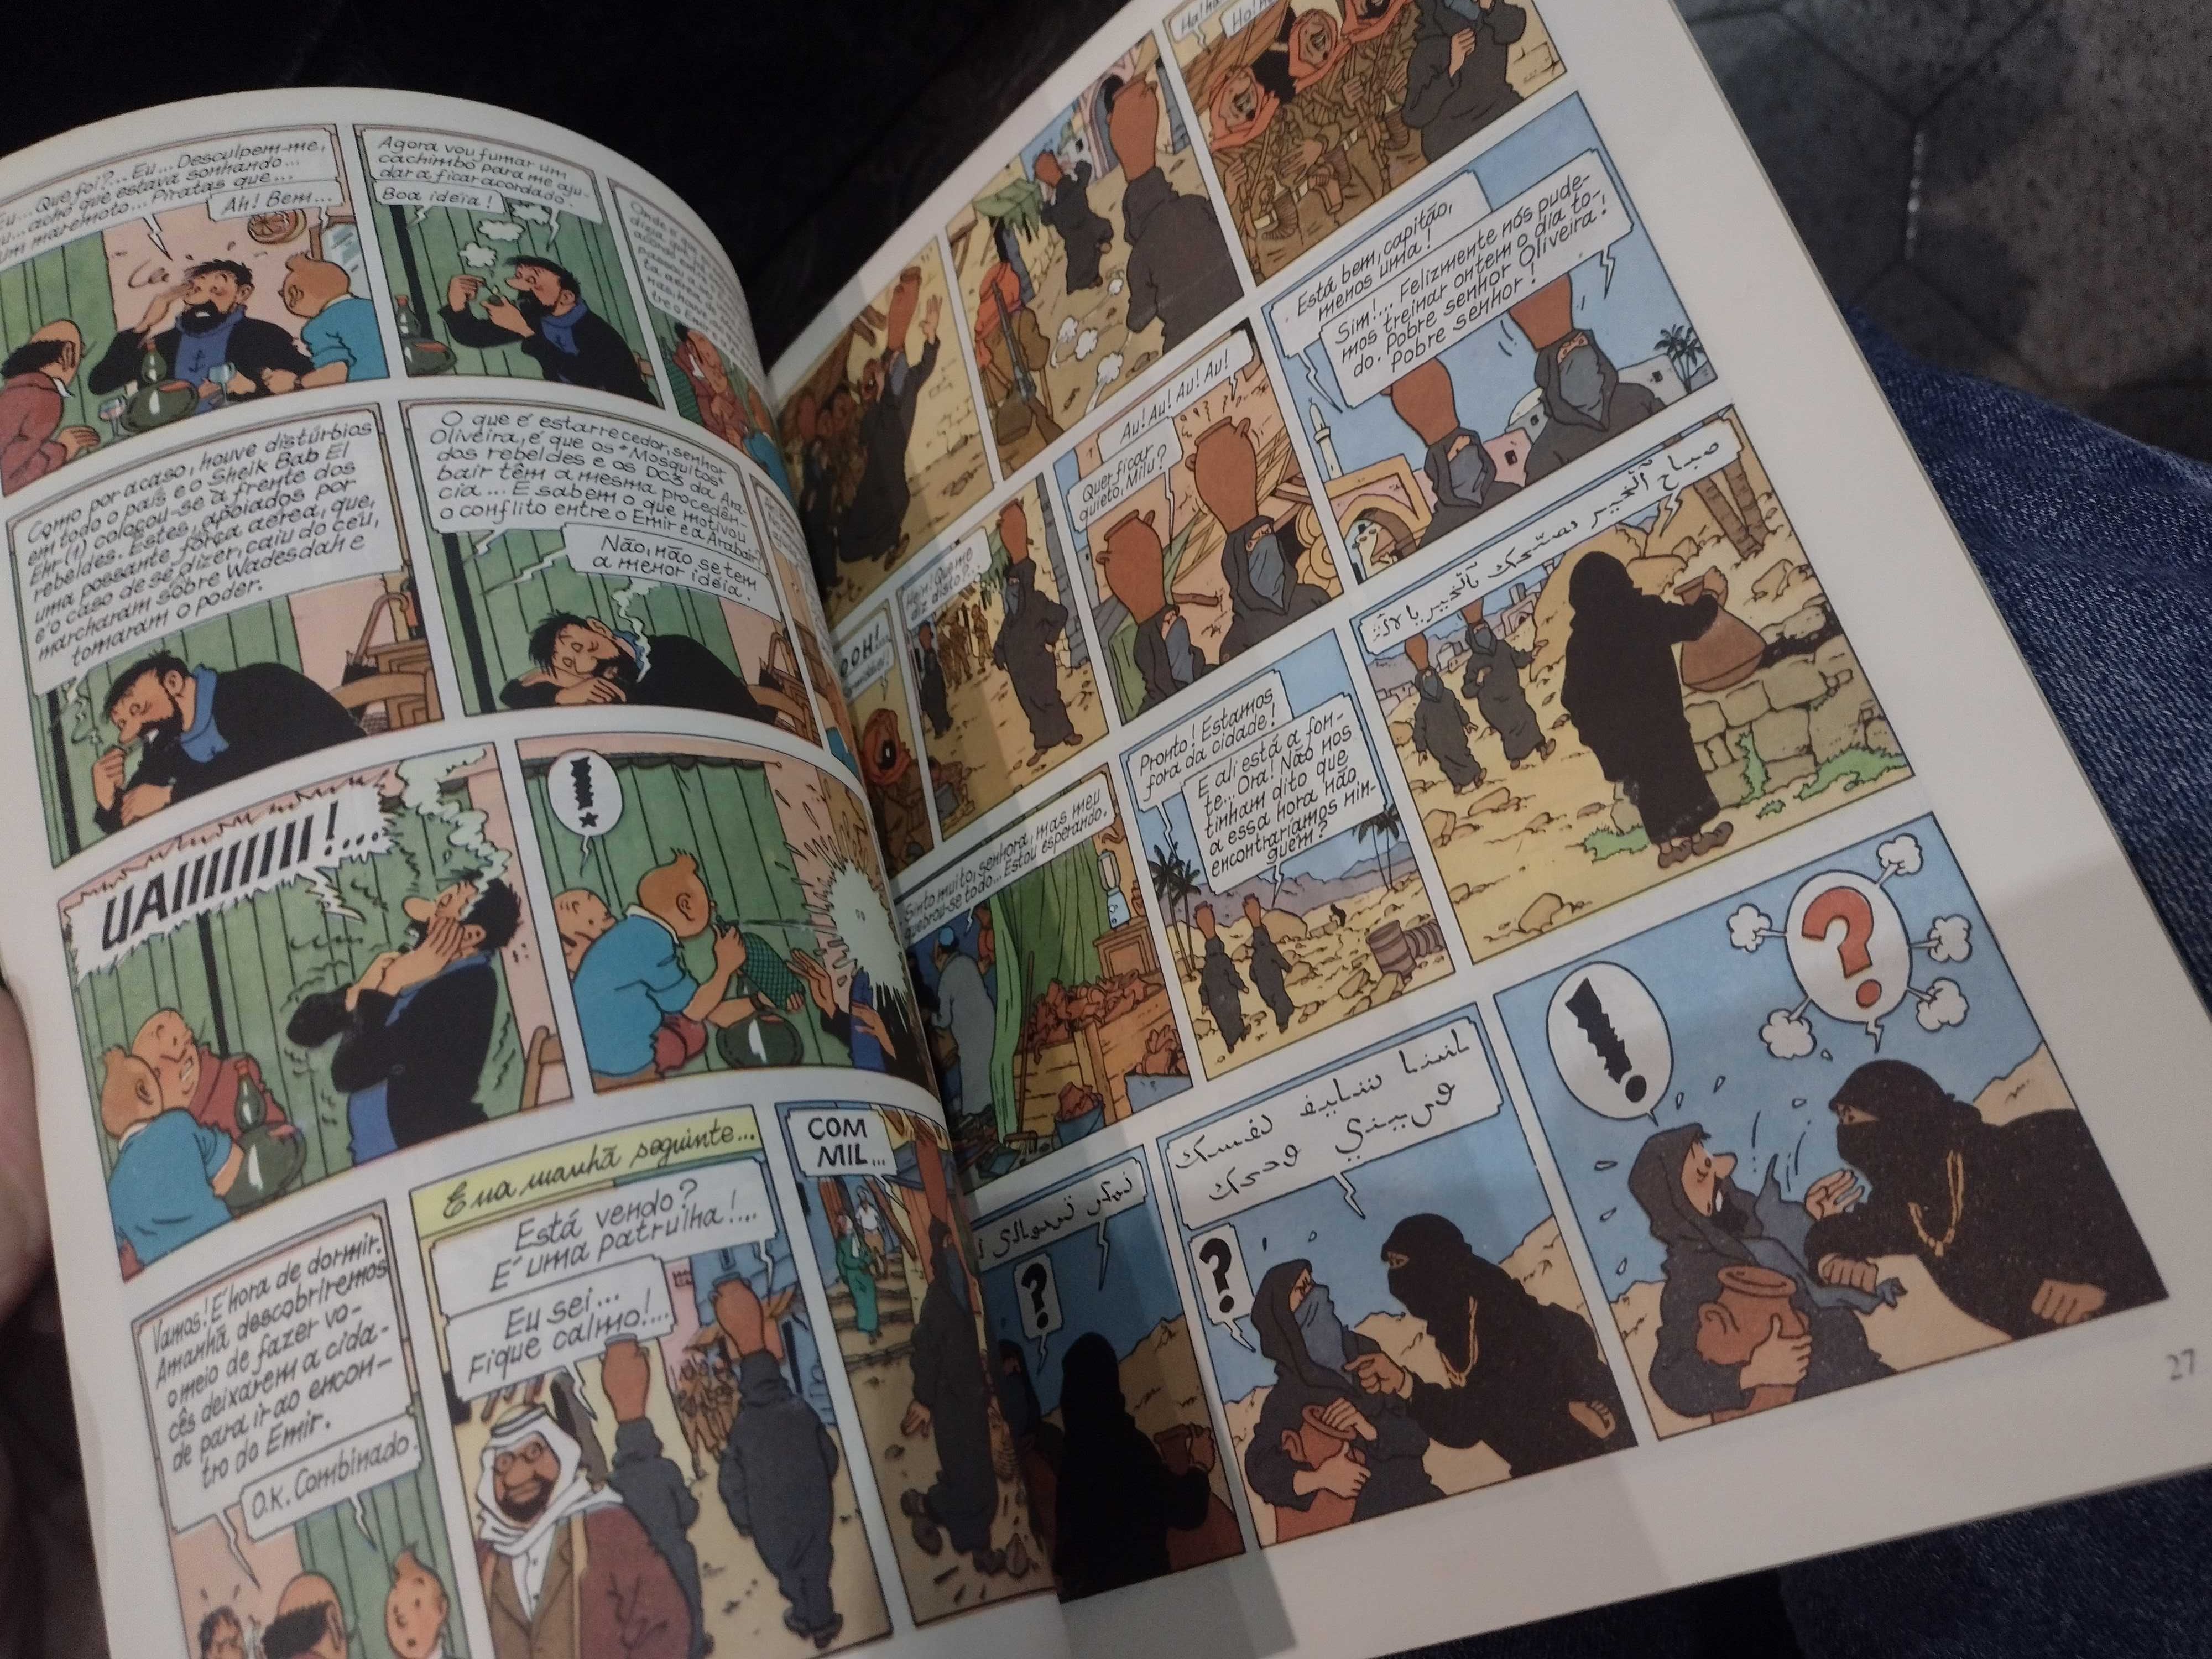 Tintim Perdidos no Mar "Record" "Hergé"